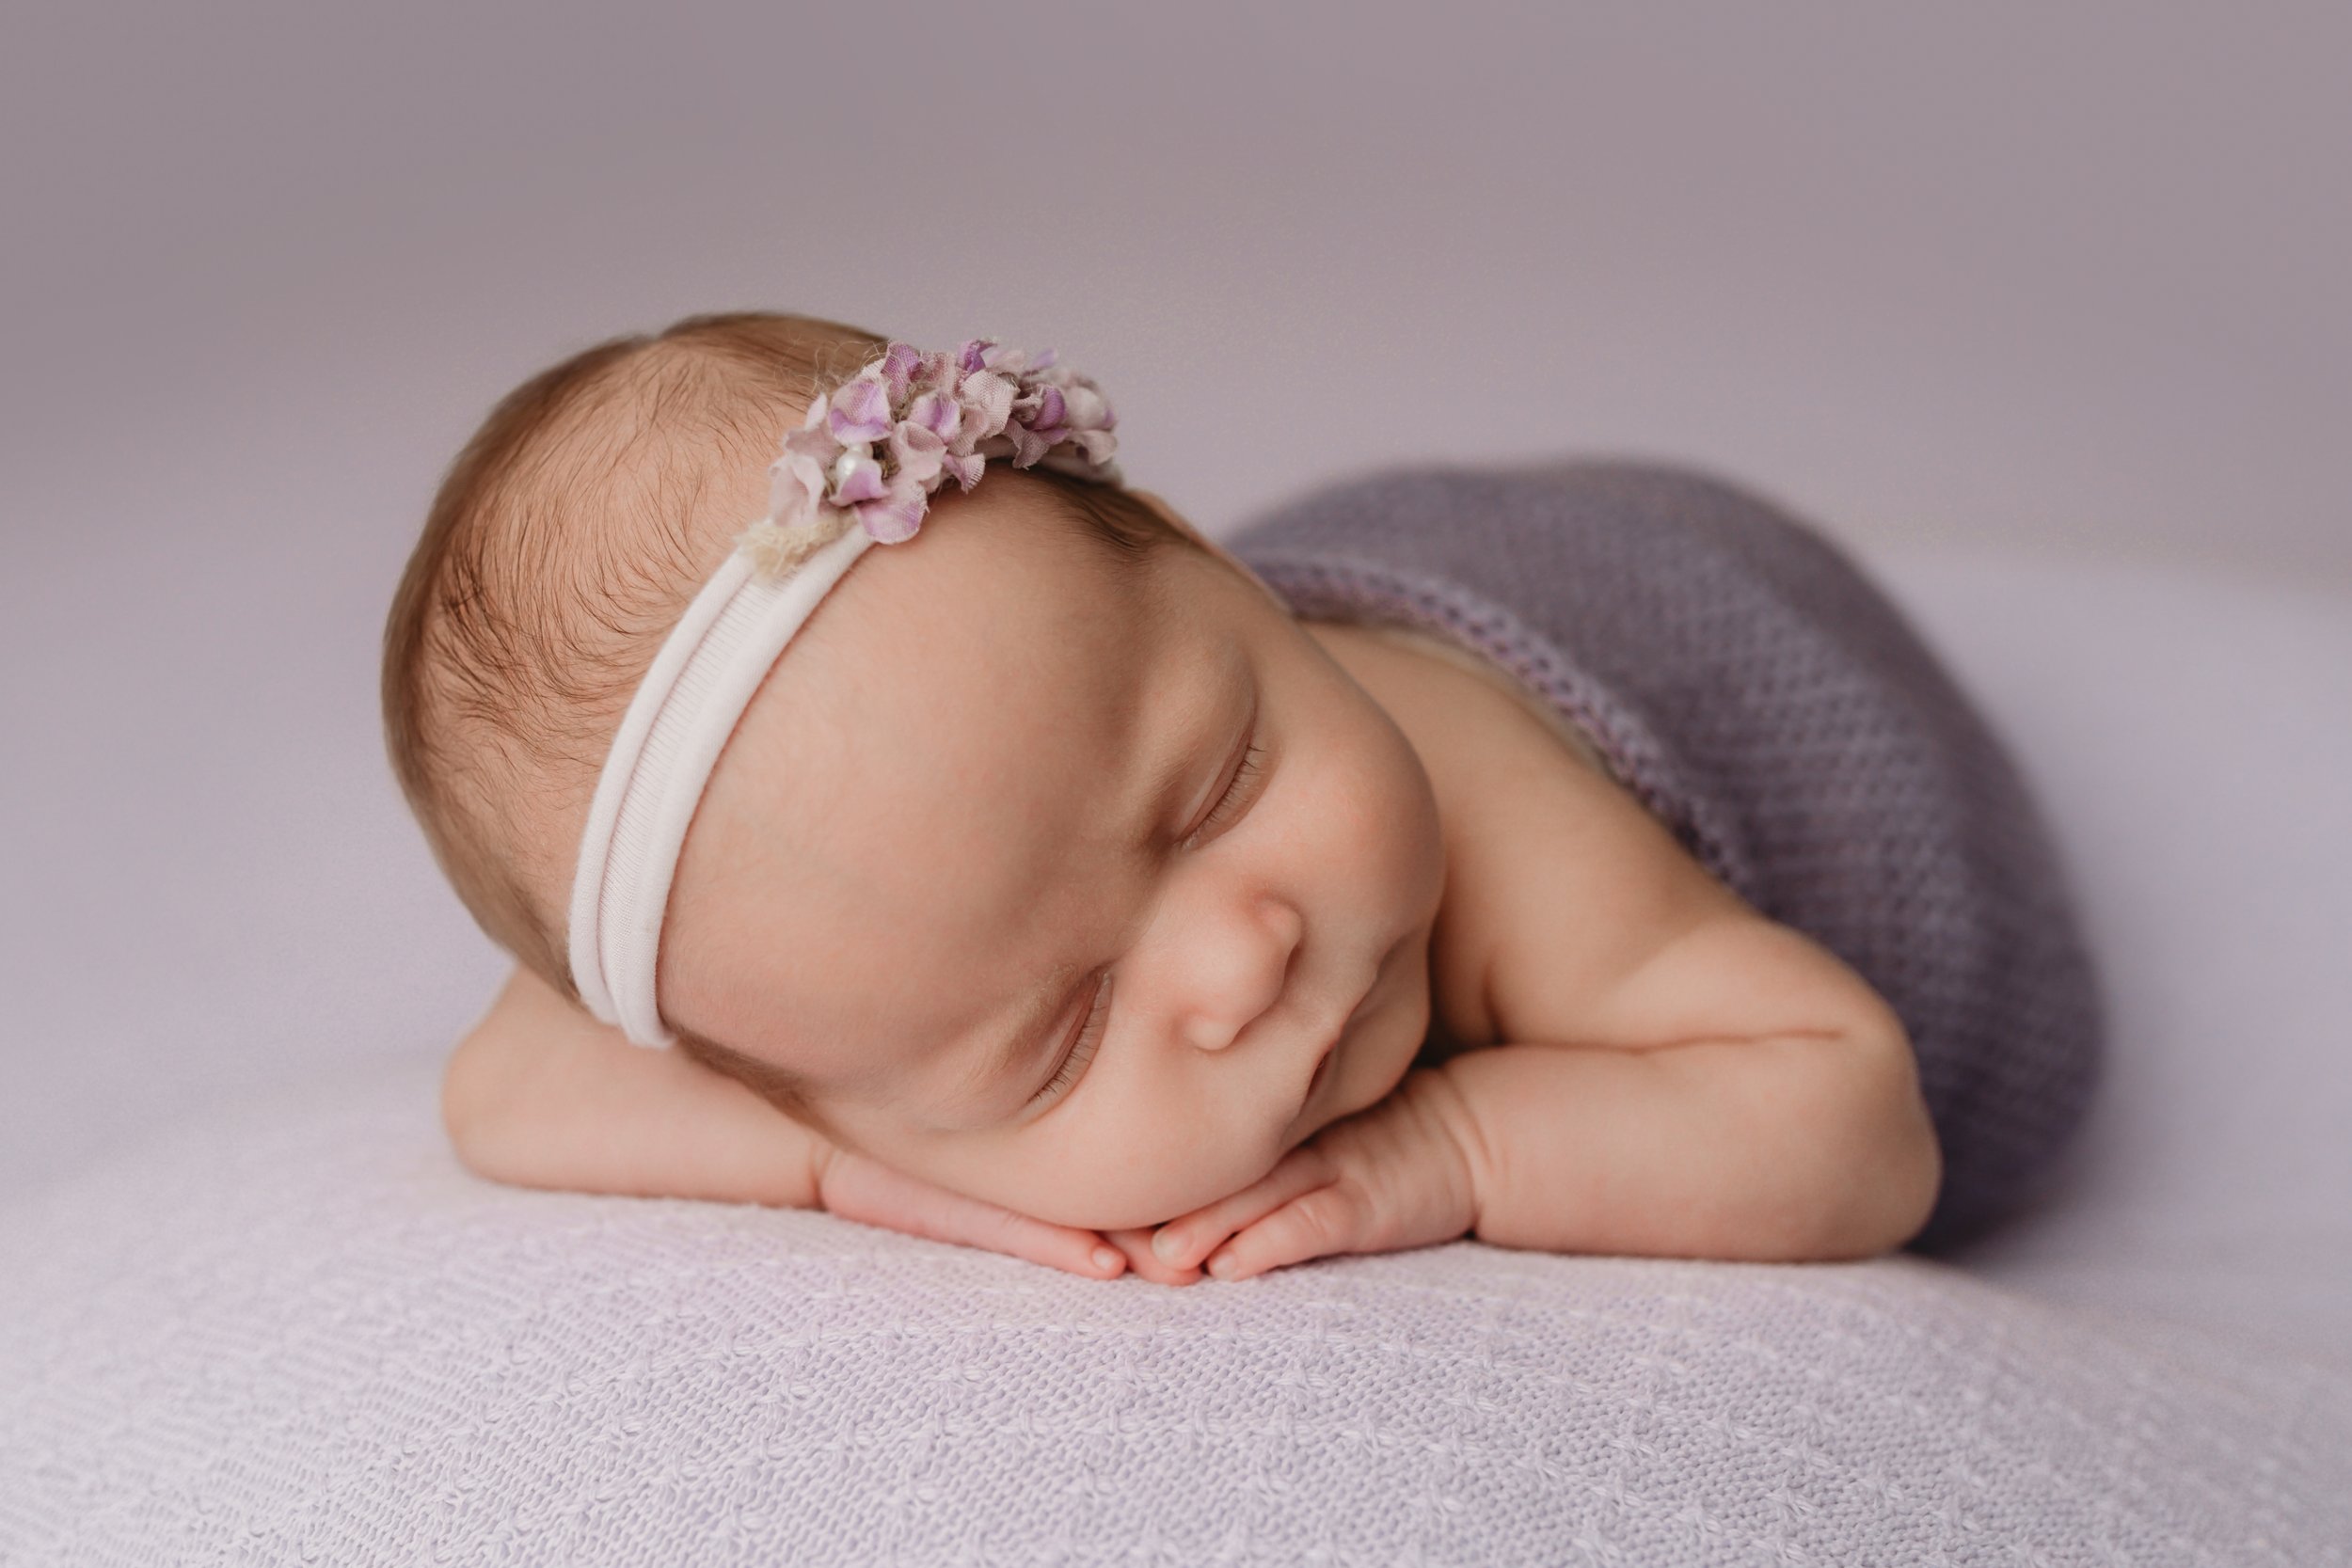 Boca-Raton-Newborn-Photographer-Baby-in-purple-chin-on-hands